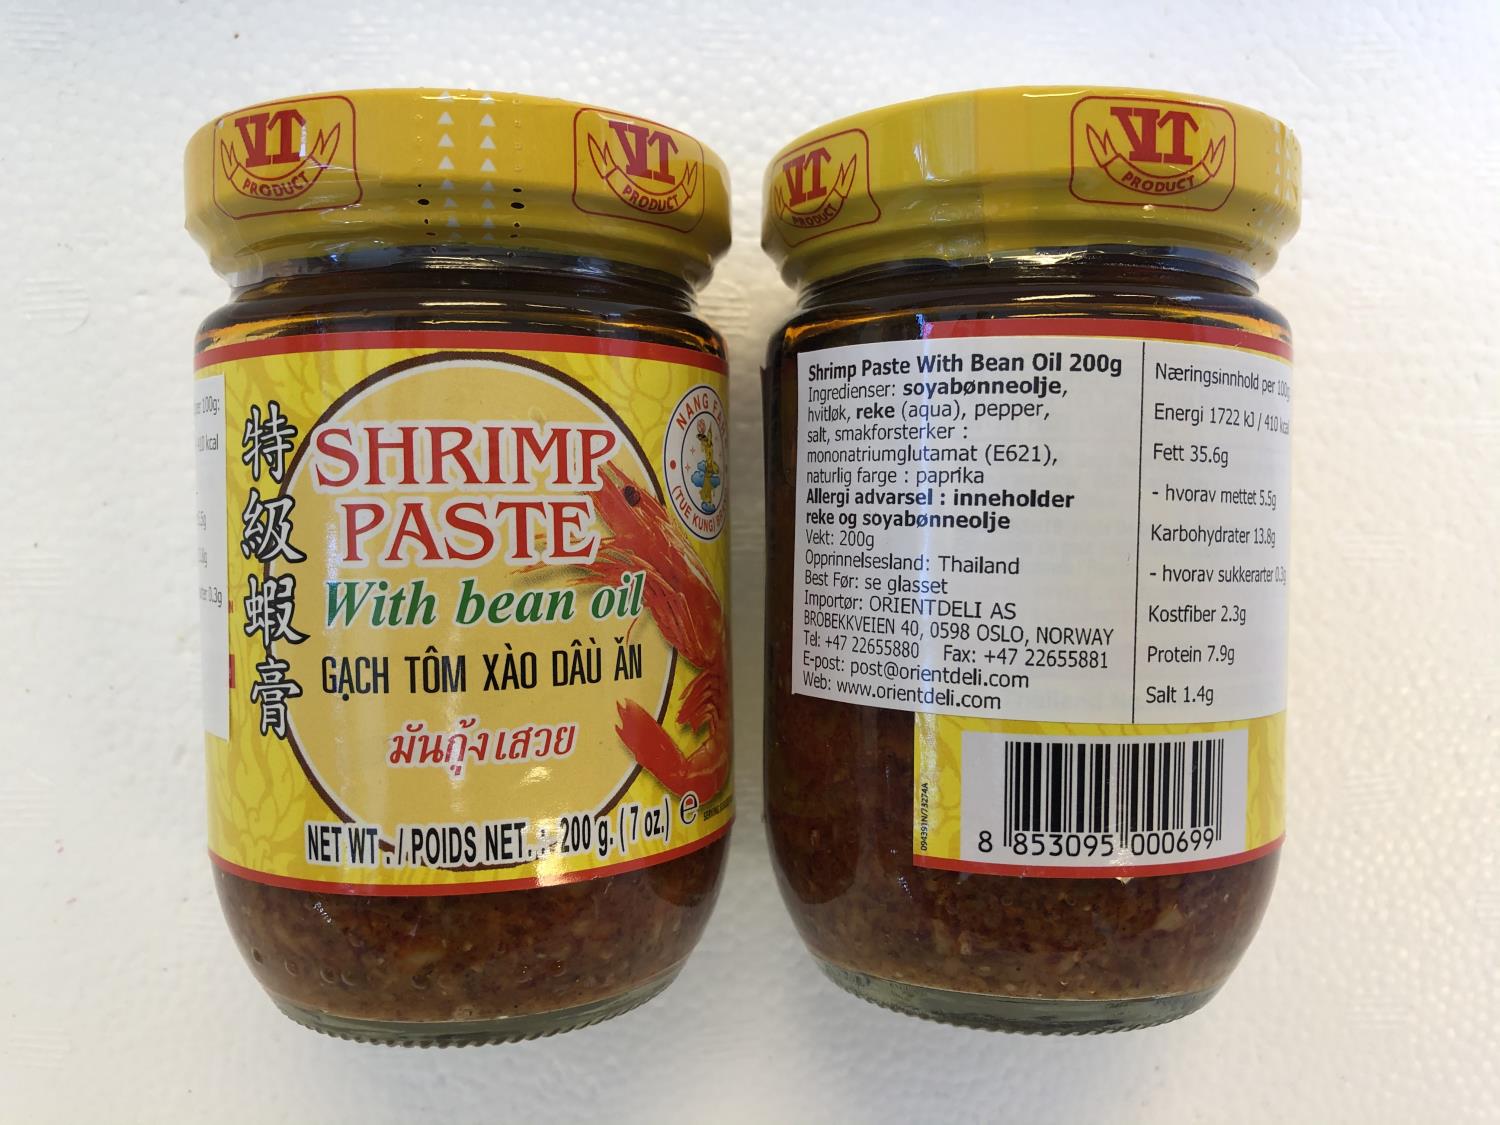 NANG FAH Shrimp Paste with Bean Oil 200g